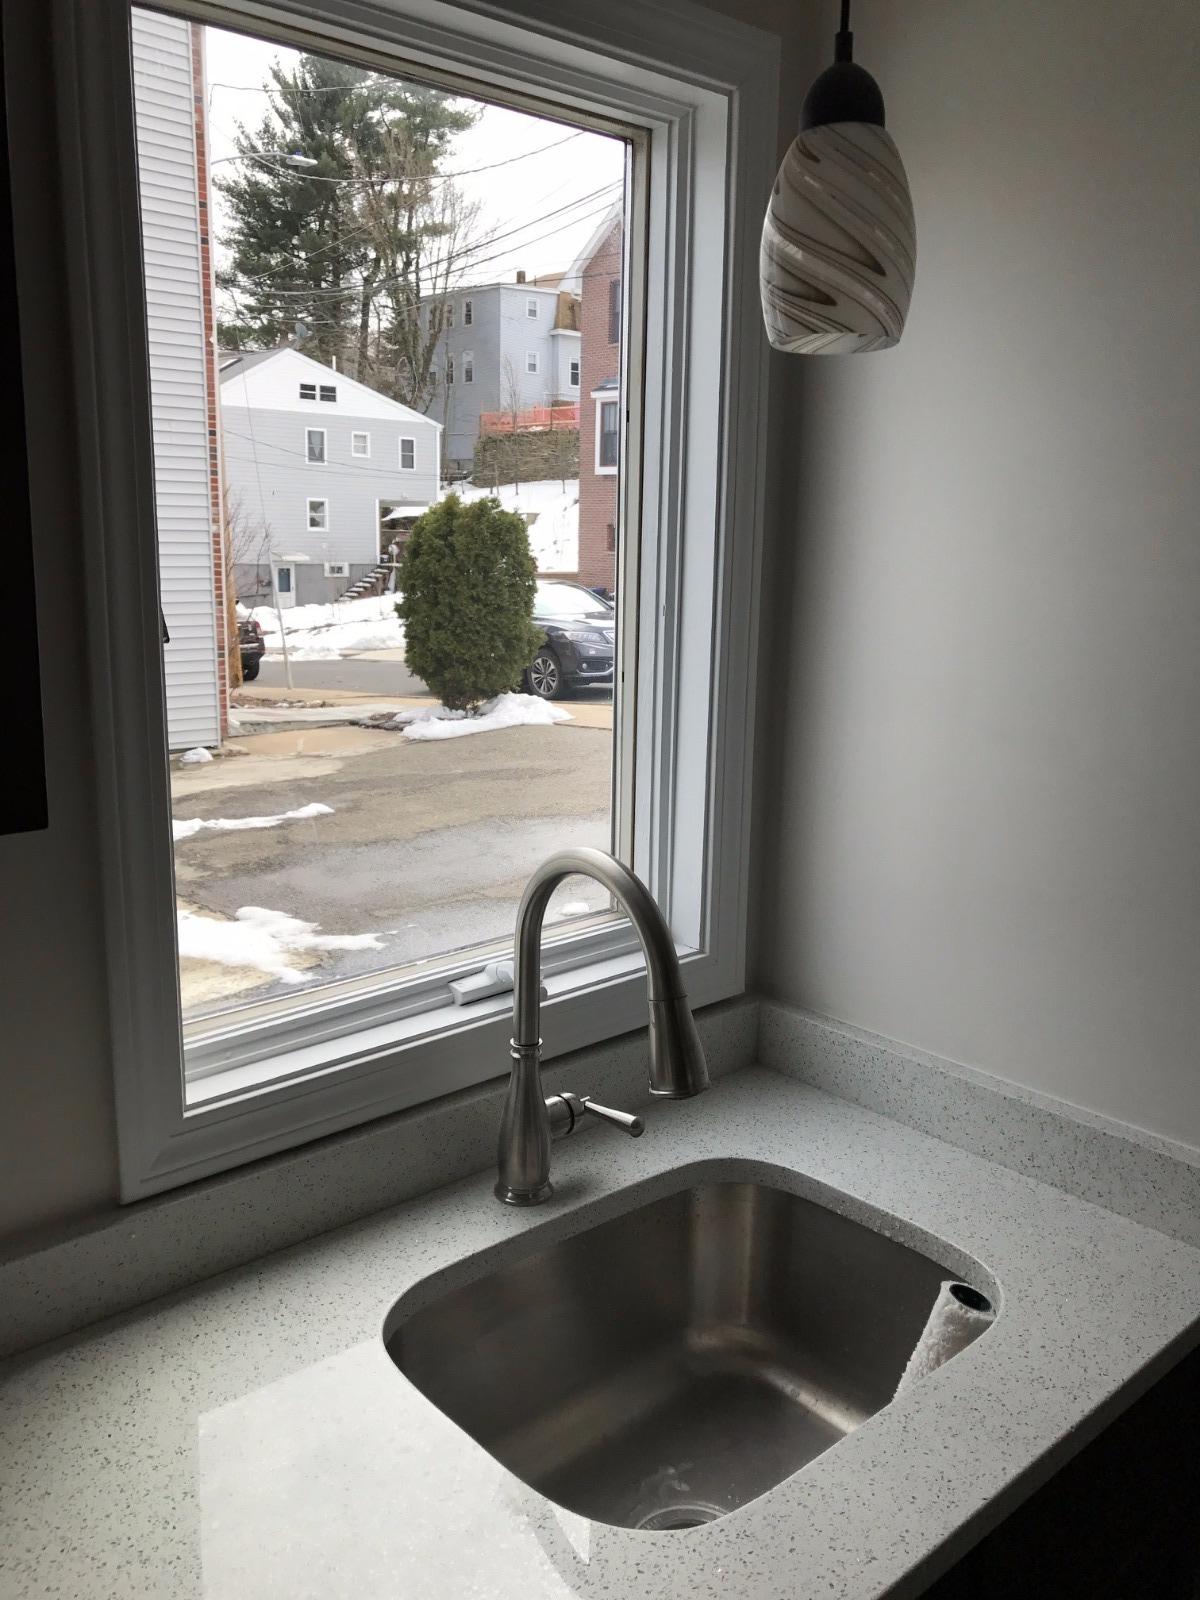 Photos of apartment on Gerrish,Boston MA 02135